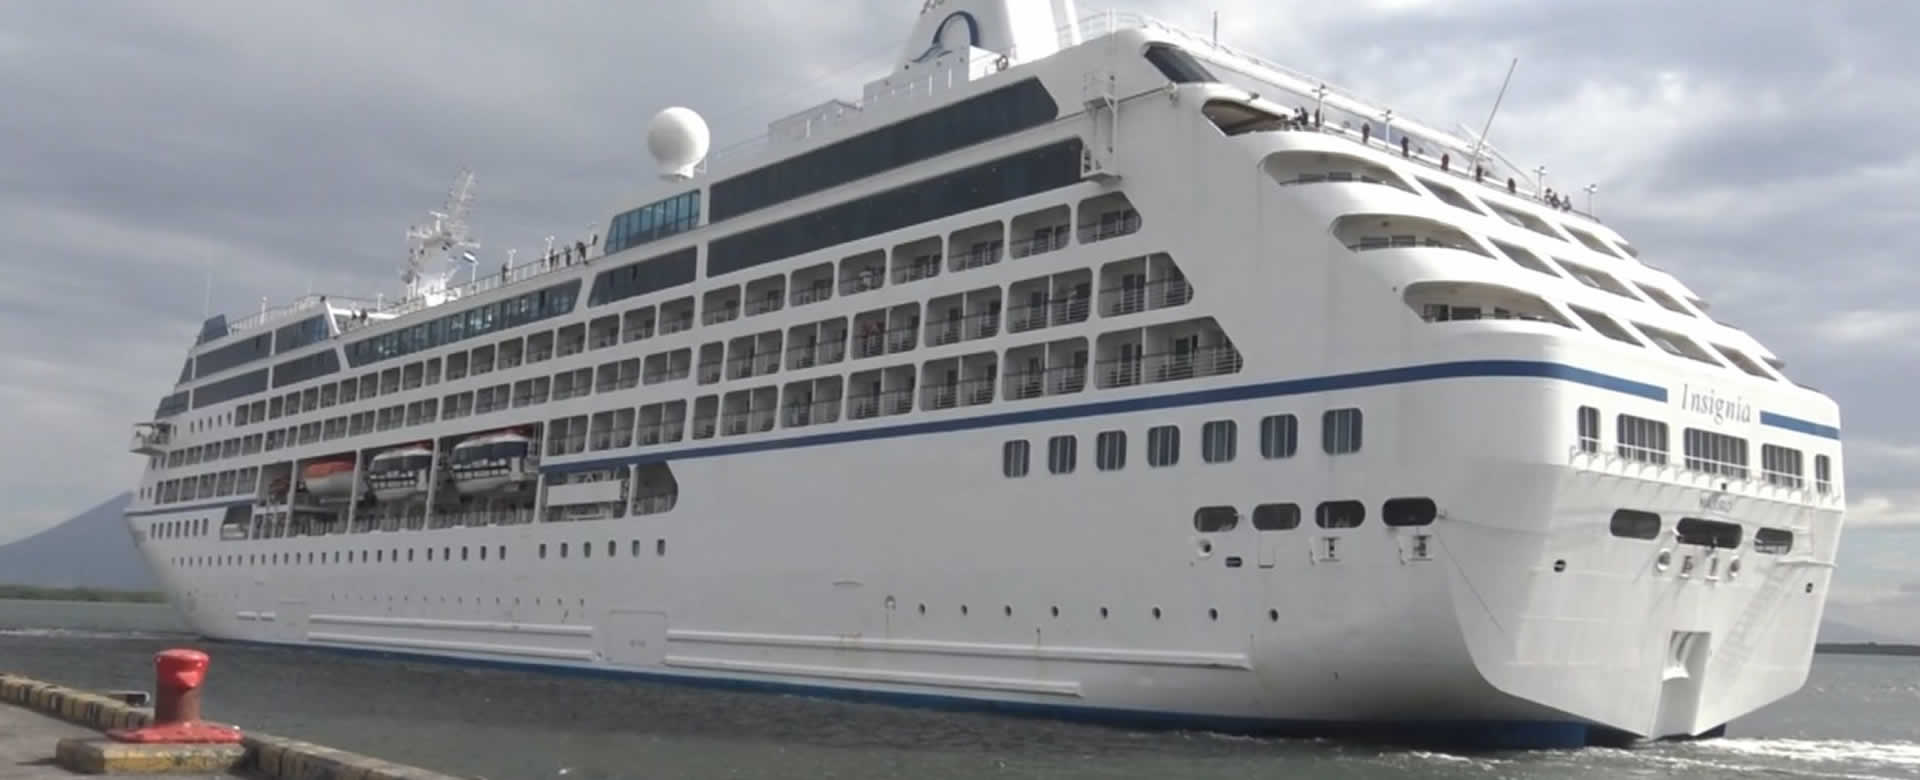 Crucero Insignia llega a Nicaragua con cientos de turistas